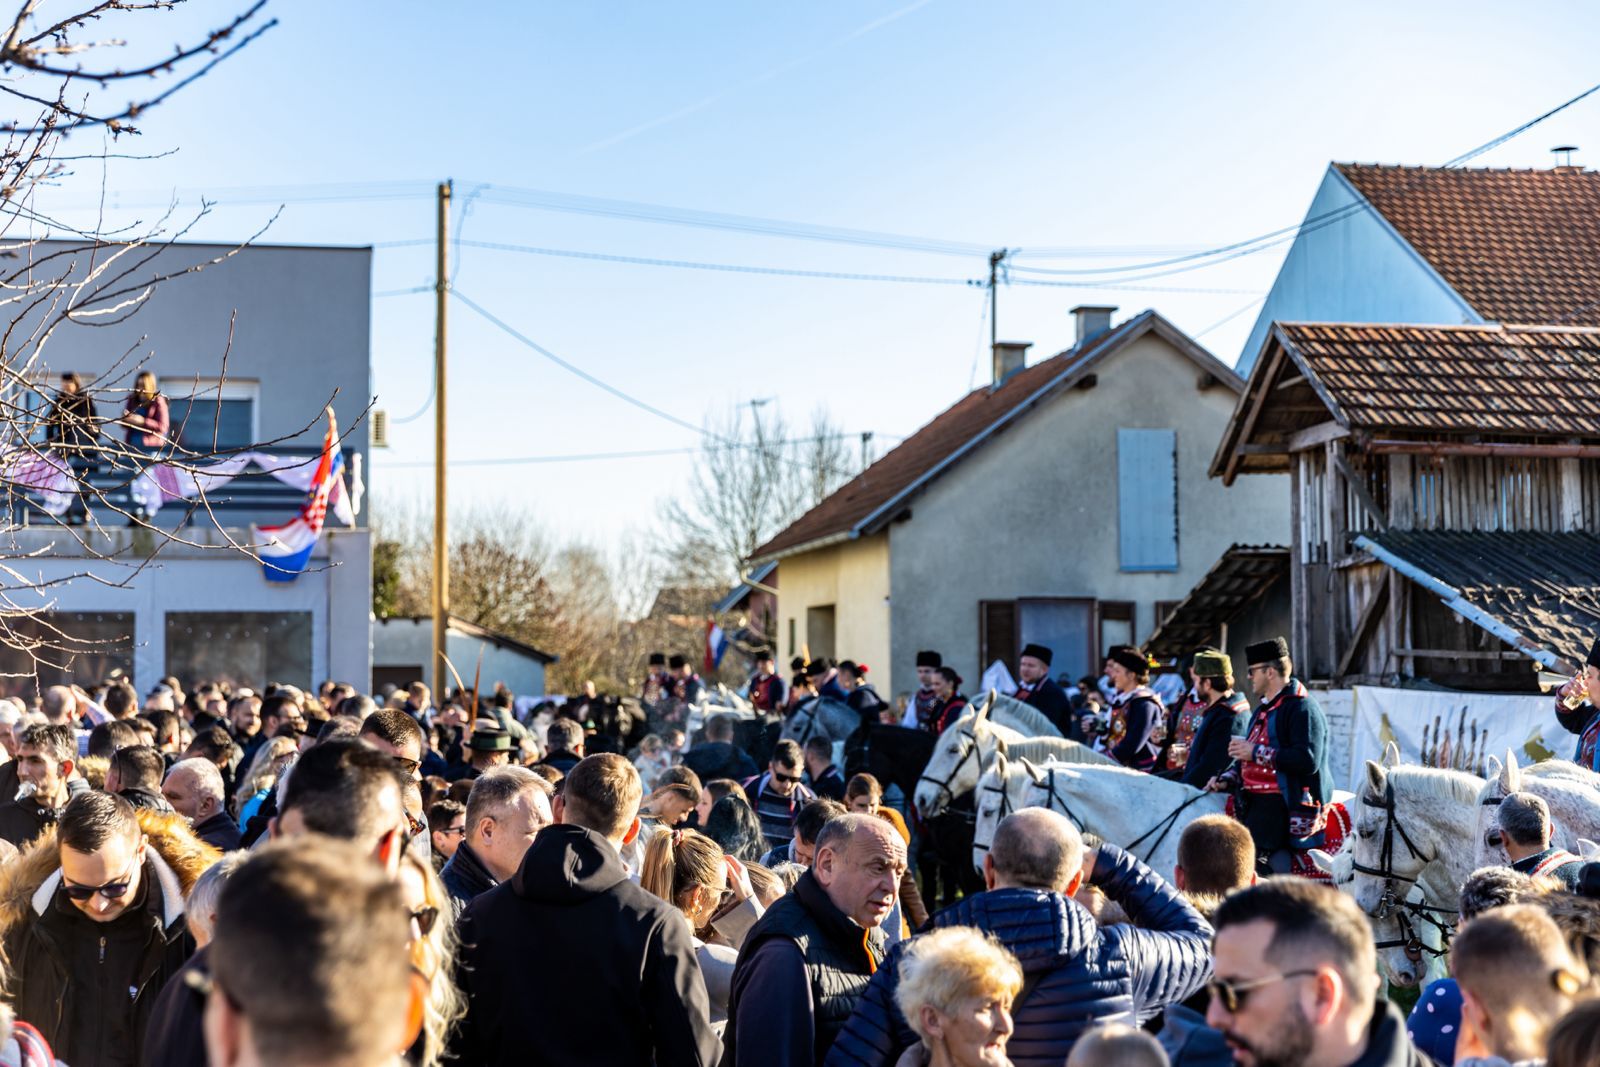 The 200-year-old Croatian tradition of Pokladno Jahanje comes alive in Osijek